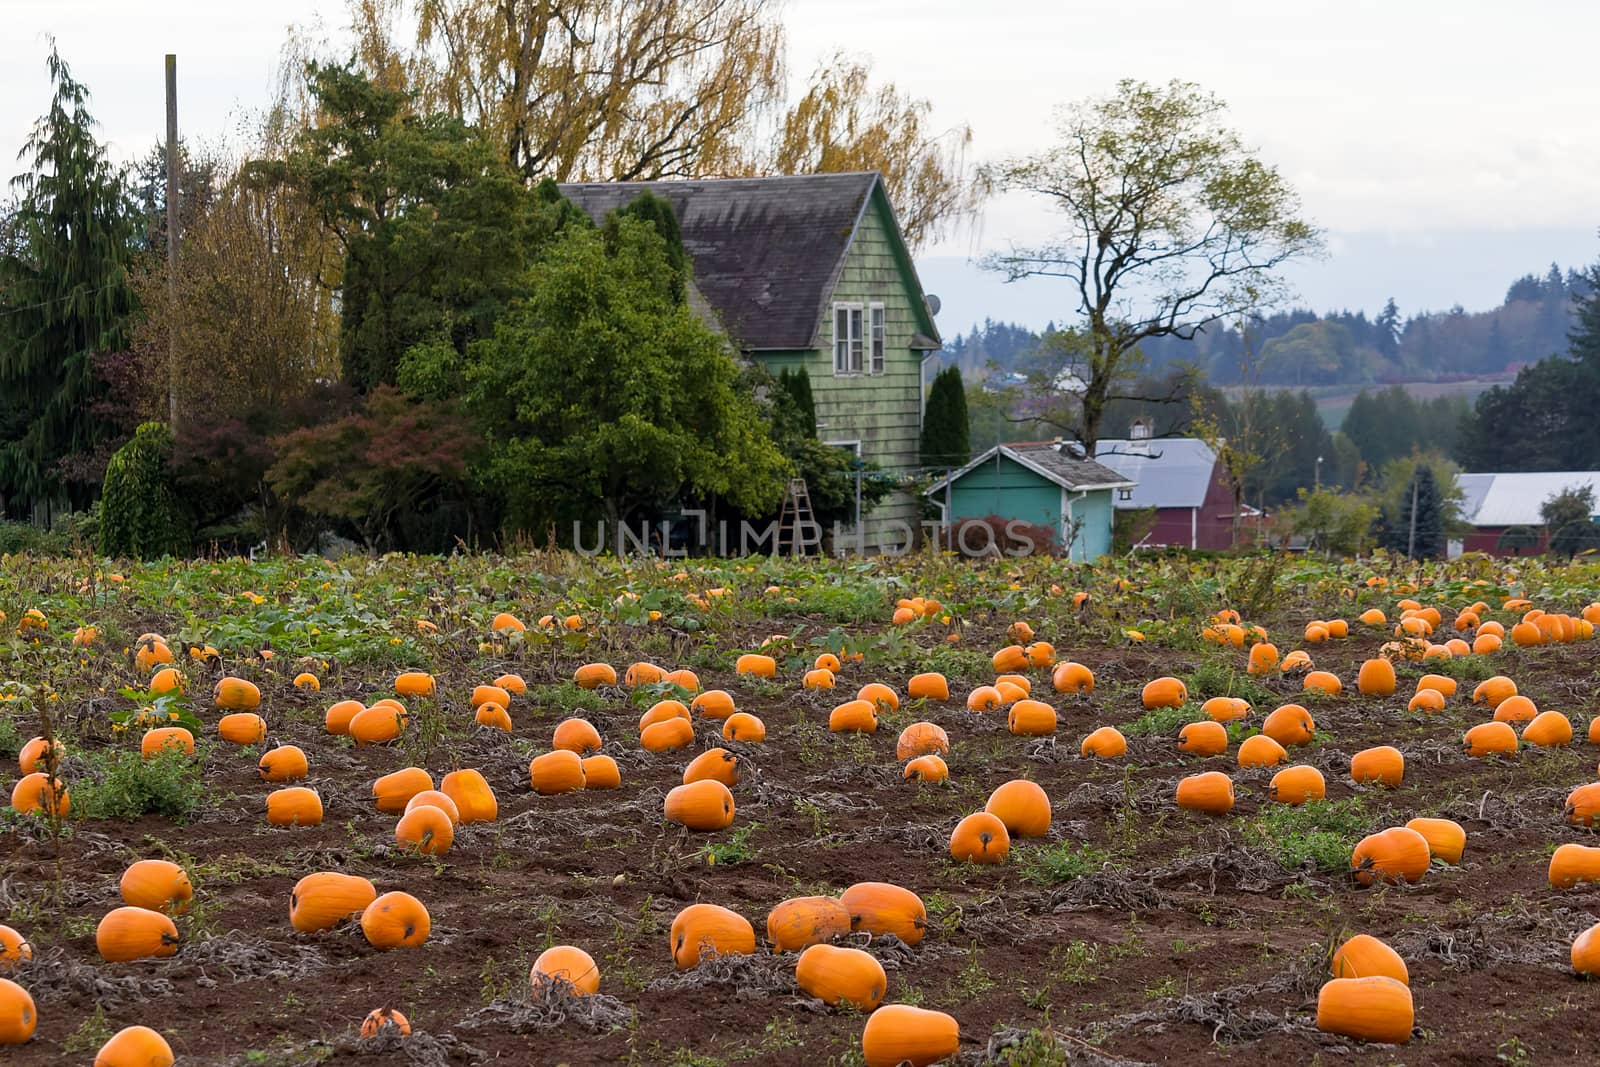 Pumpkin Patch by Farm House in Oregon by jpldesigns